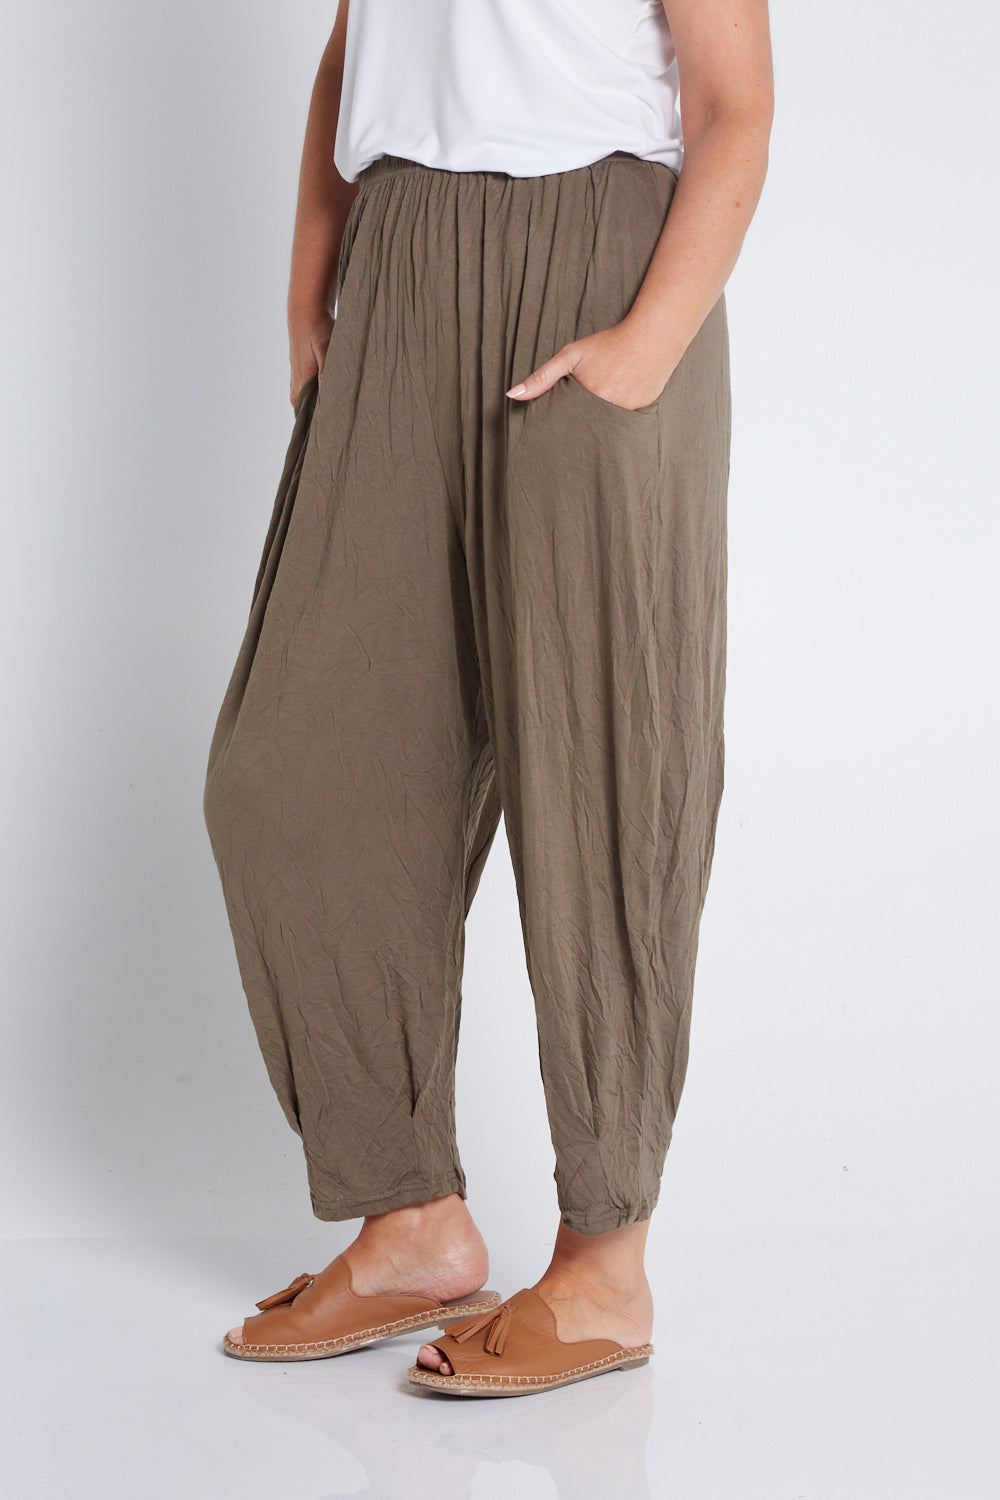 Trendy & Casual Pants for Women Australia - Ladies Pants Online - Tussah